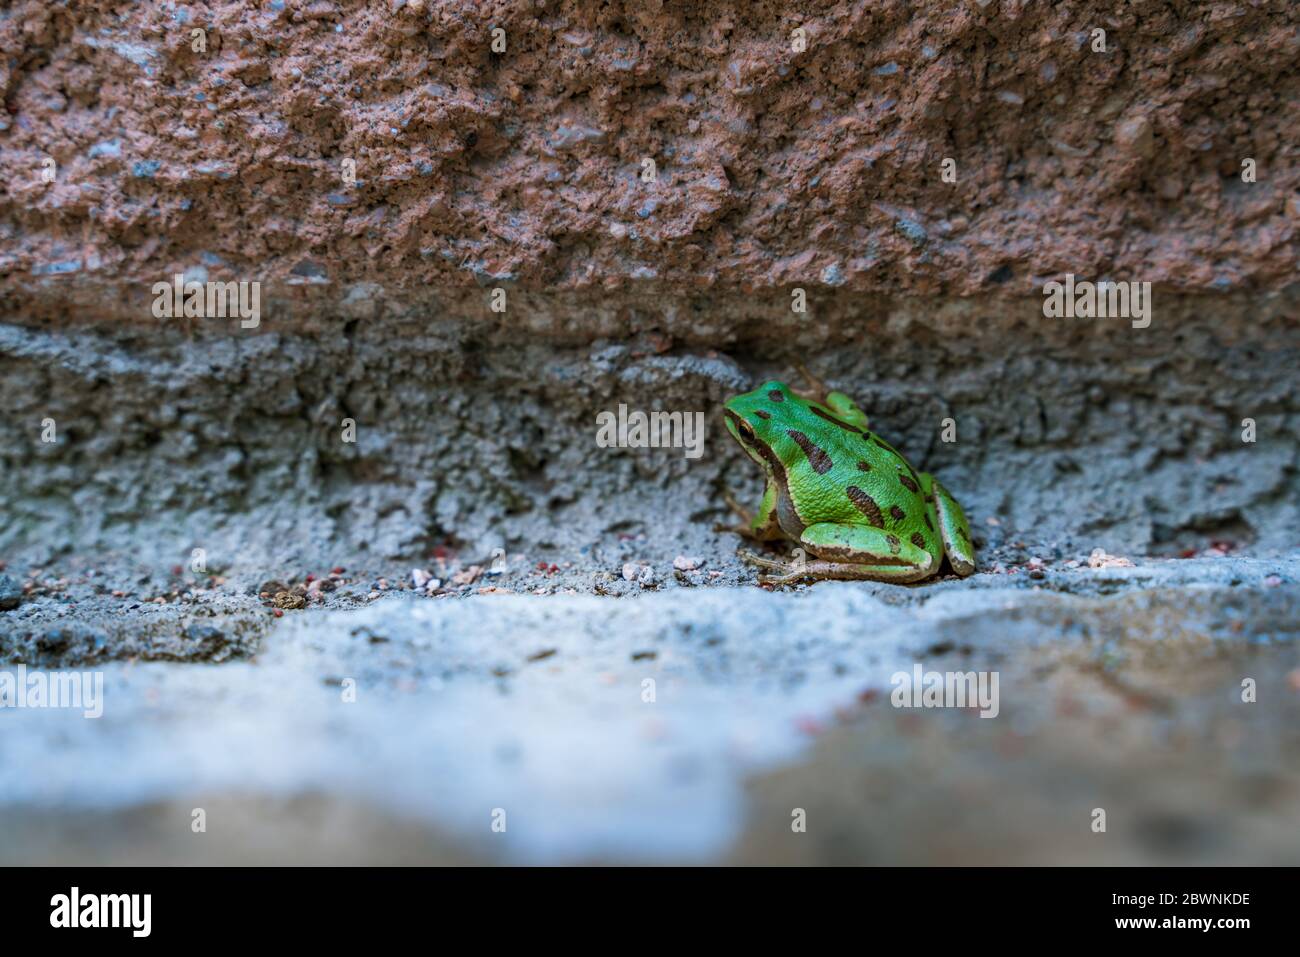 Green frog at home garden Stock Photo